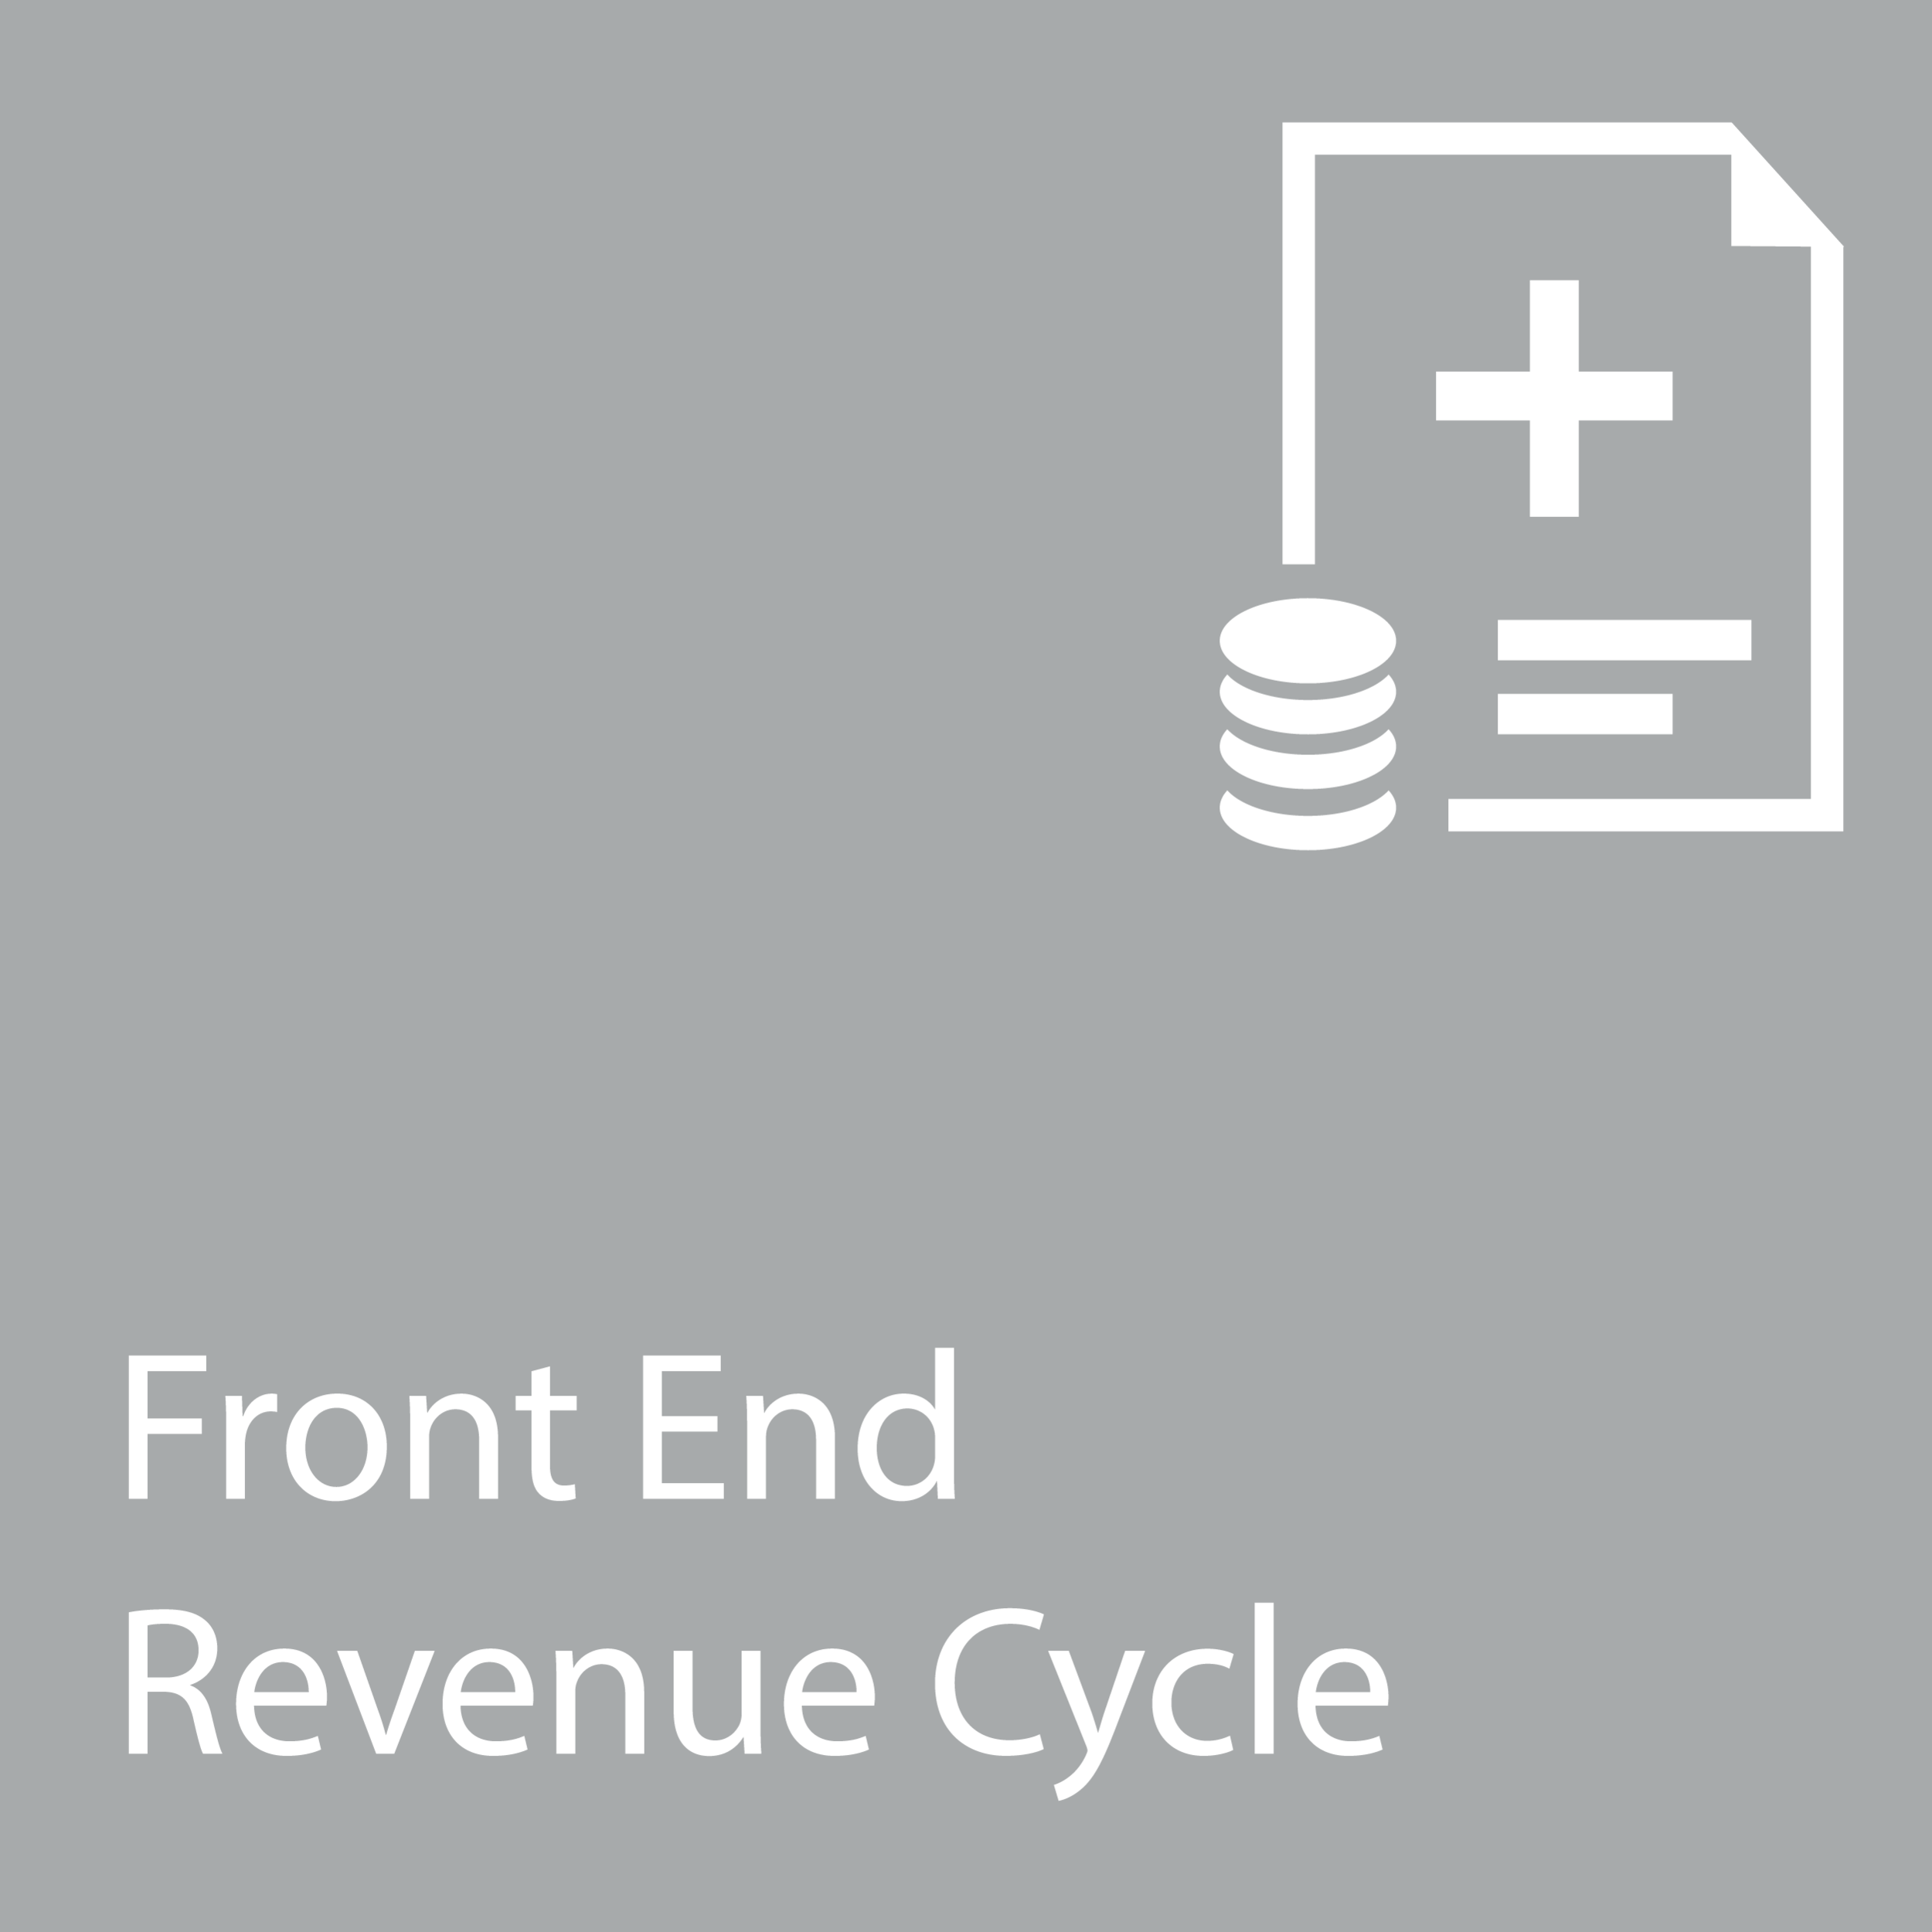 Front-End Revenue Cycle